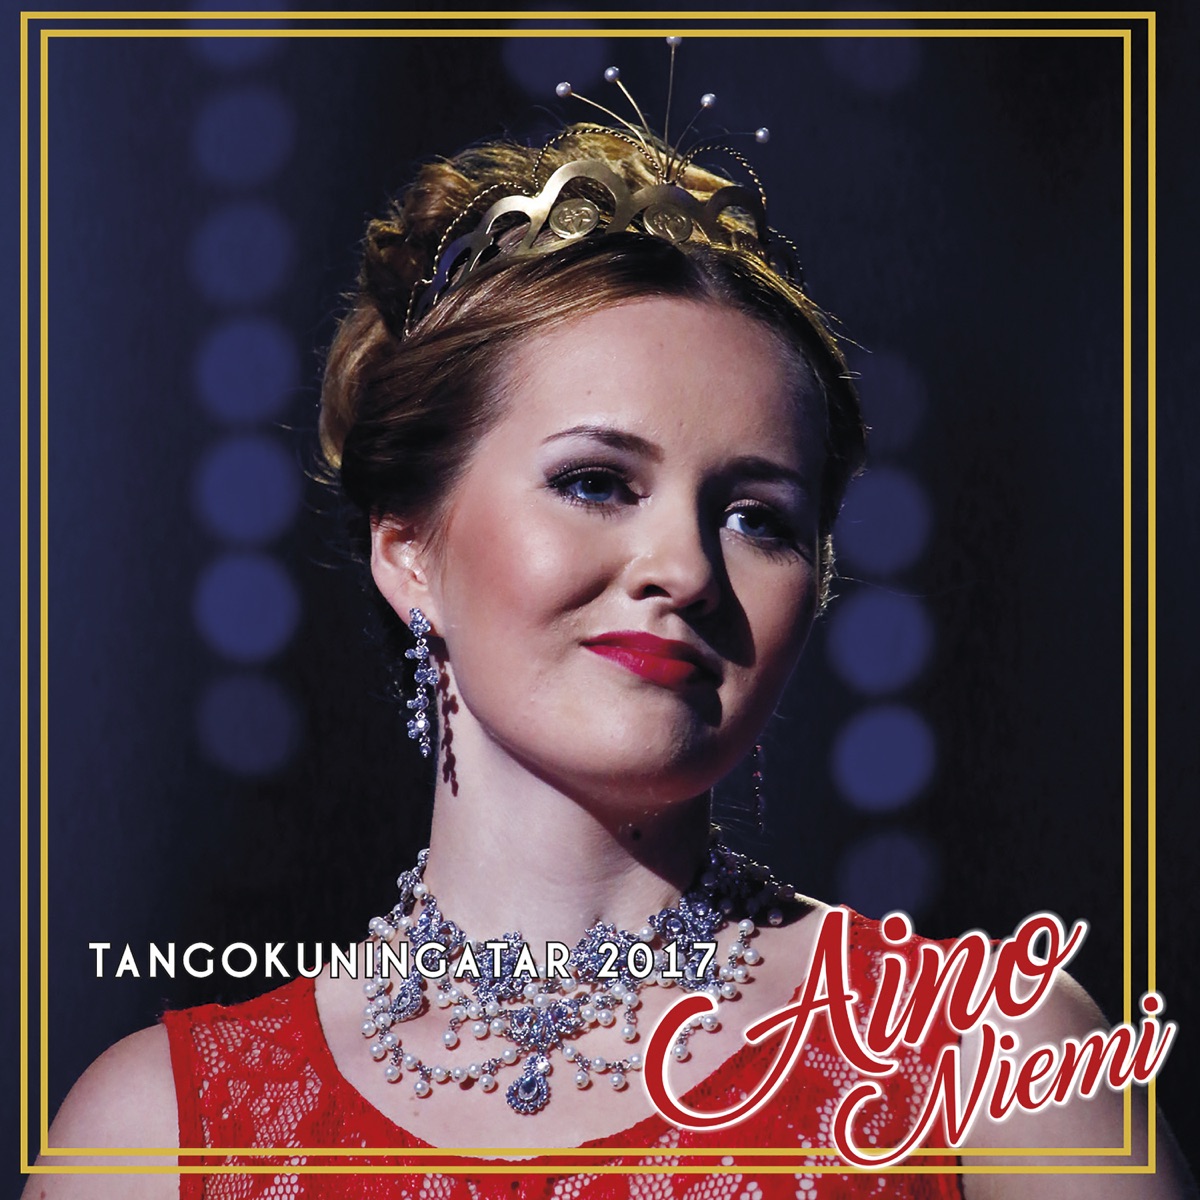 Tangokuningatar 2017 - Album by Aino Niemi - Apple Music